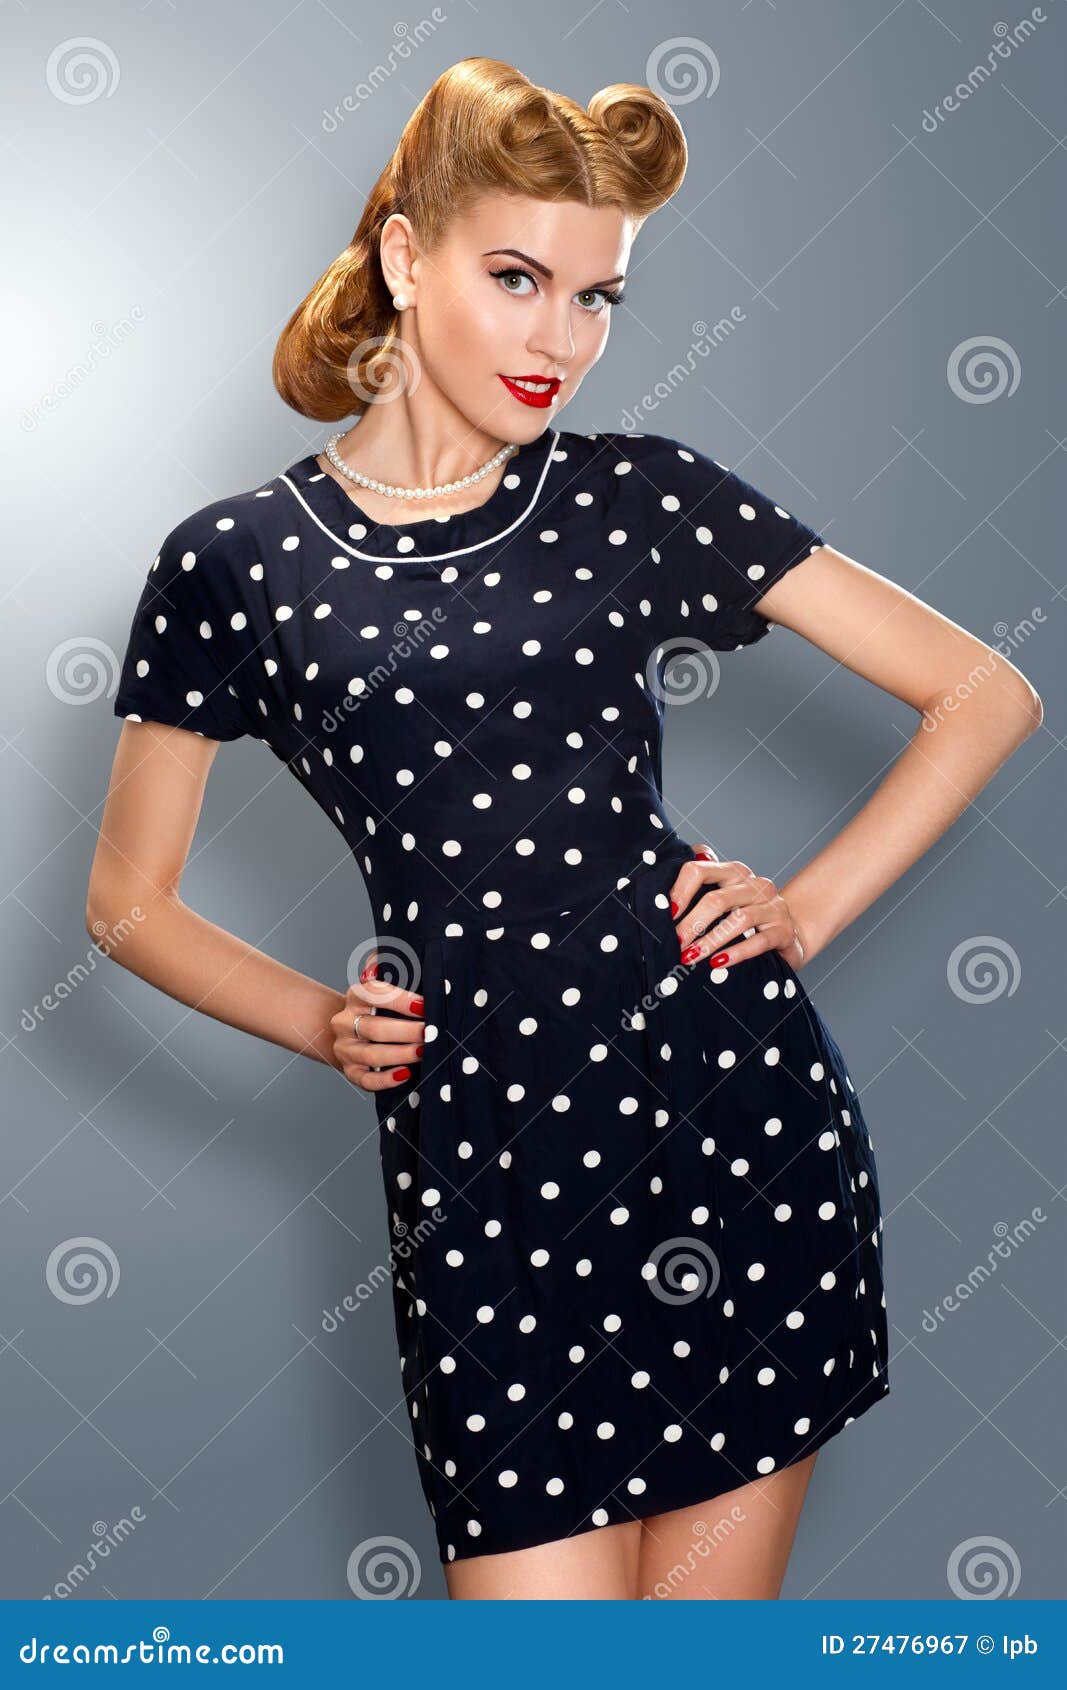 Pin Up Girl In Retro Vintage Dress Posing Royalty Free